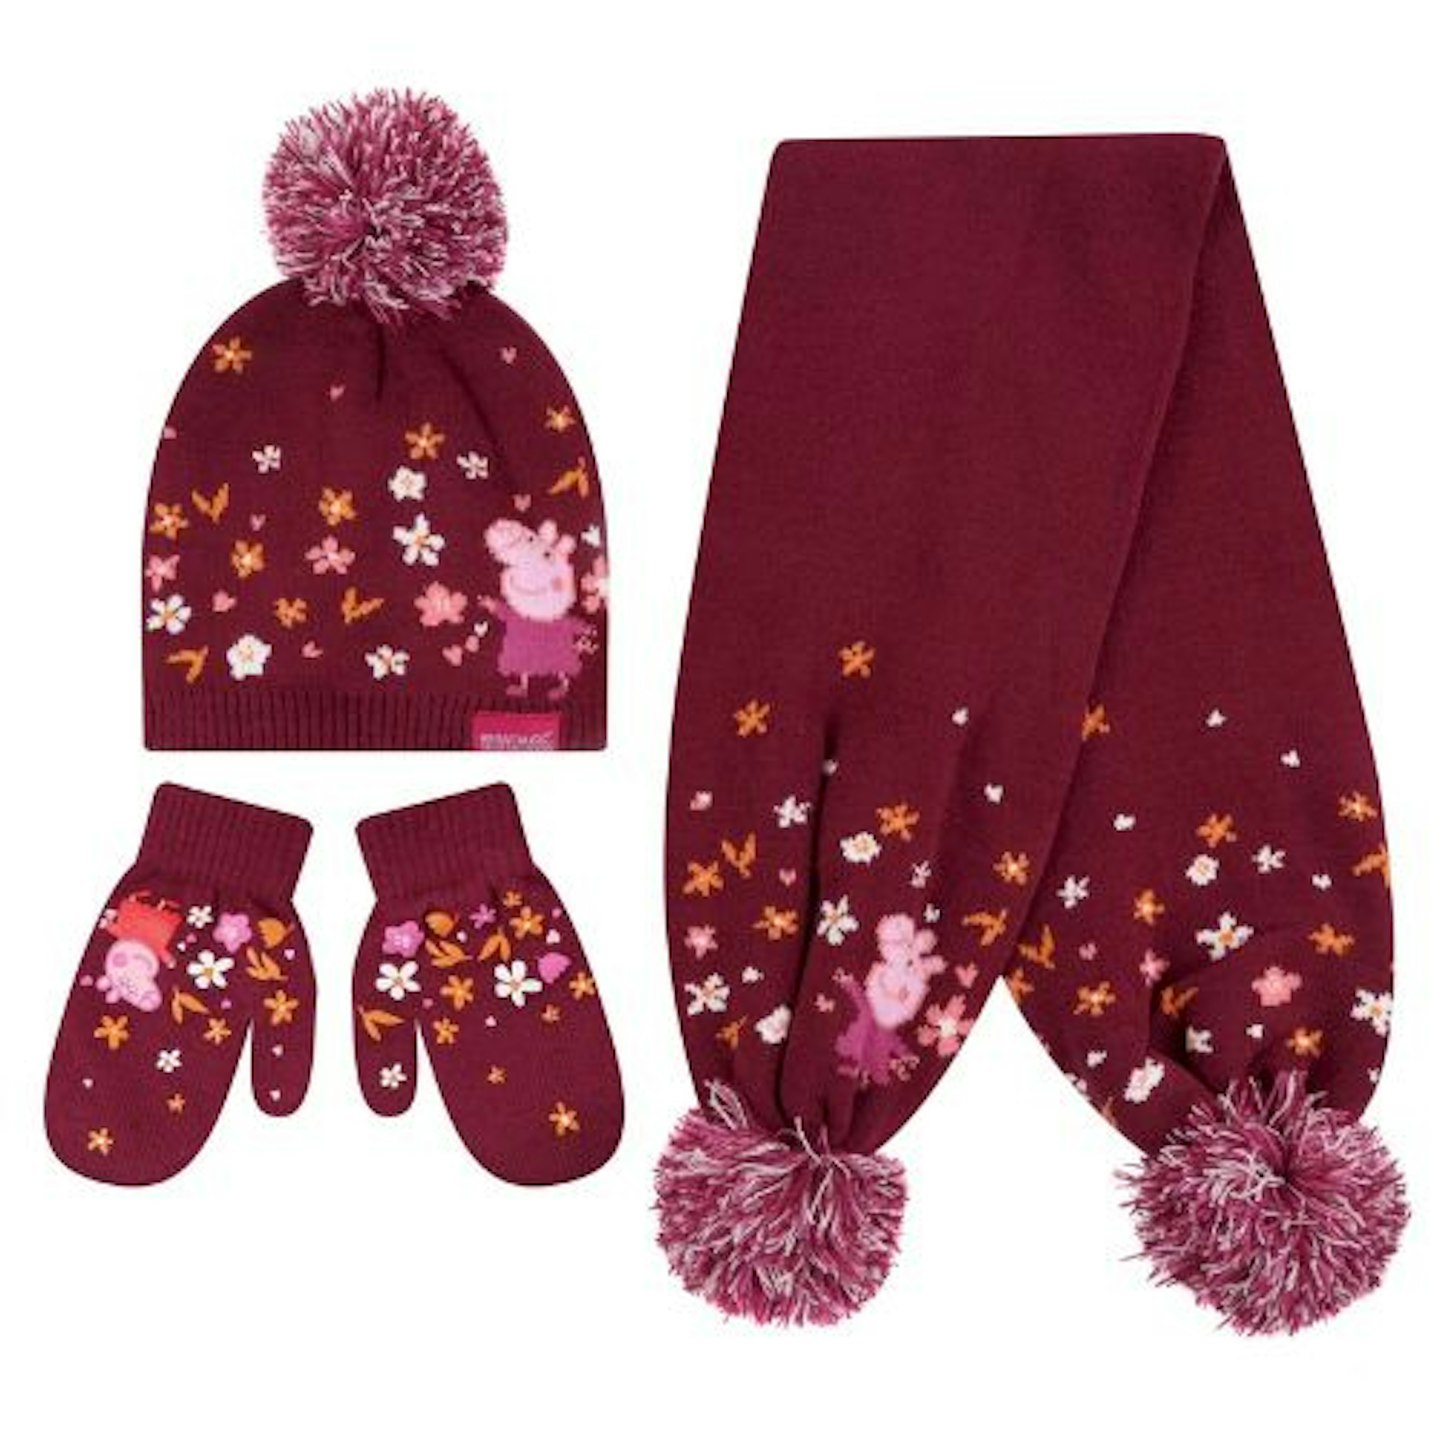 Peppa Pig Knitted Pom Pom Hat Scarf & Glove Set, Berry Pink